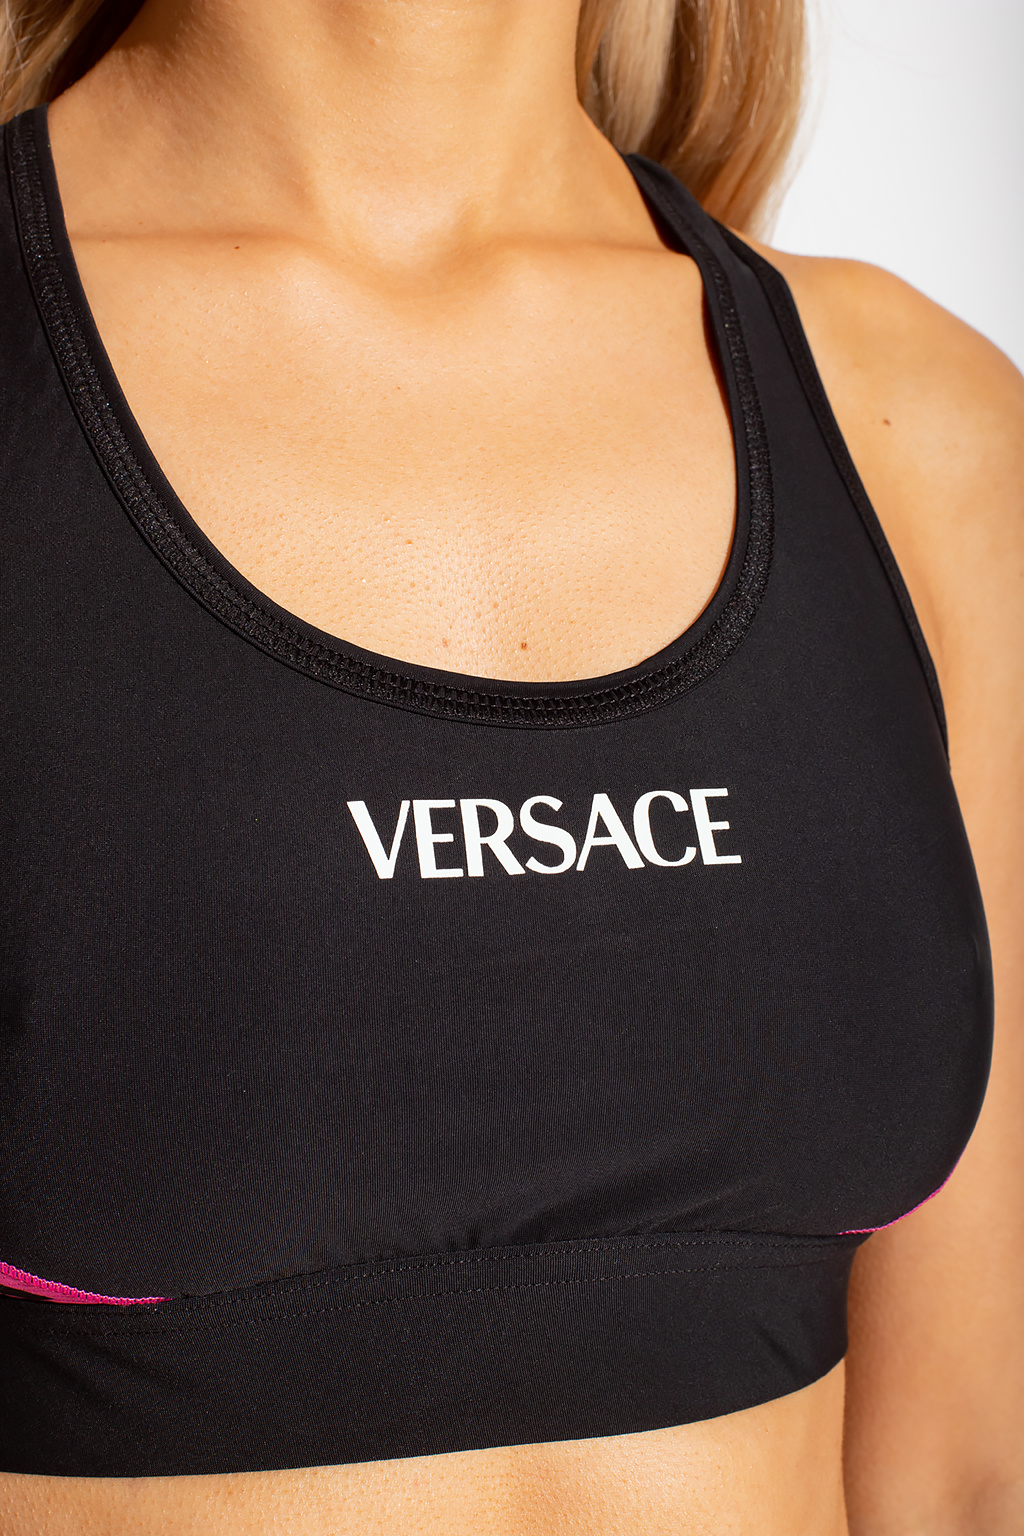 Versace Sports top